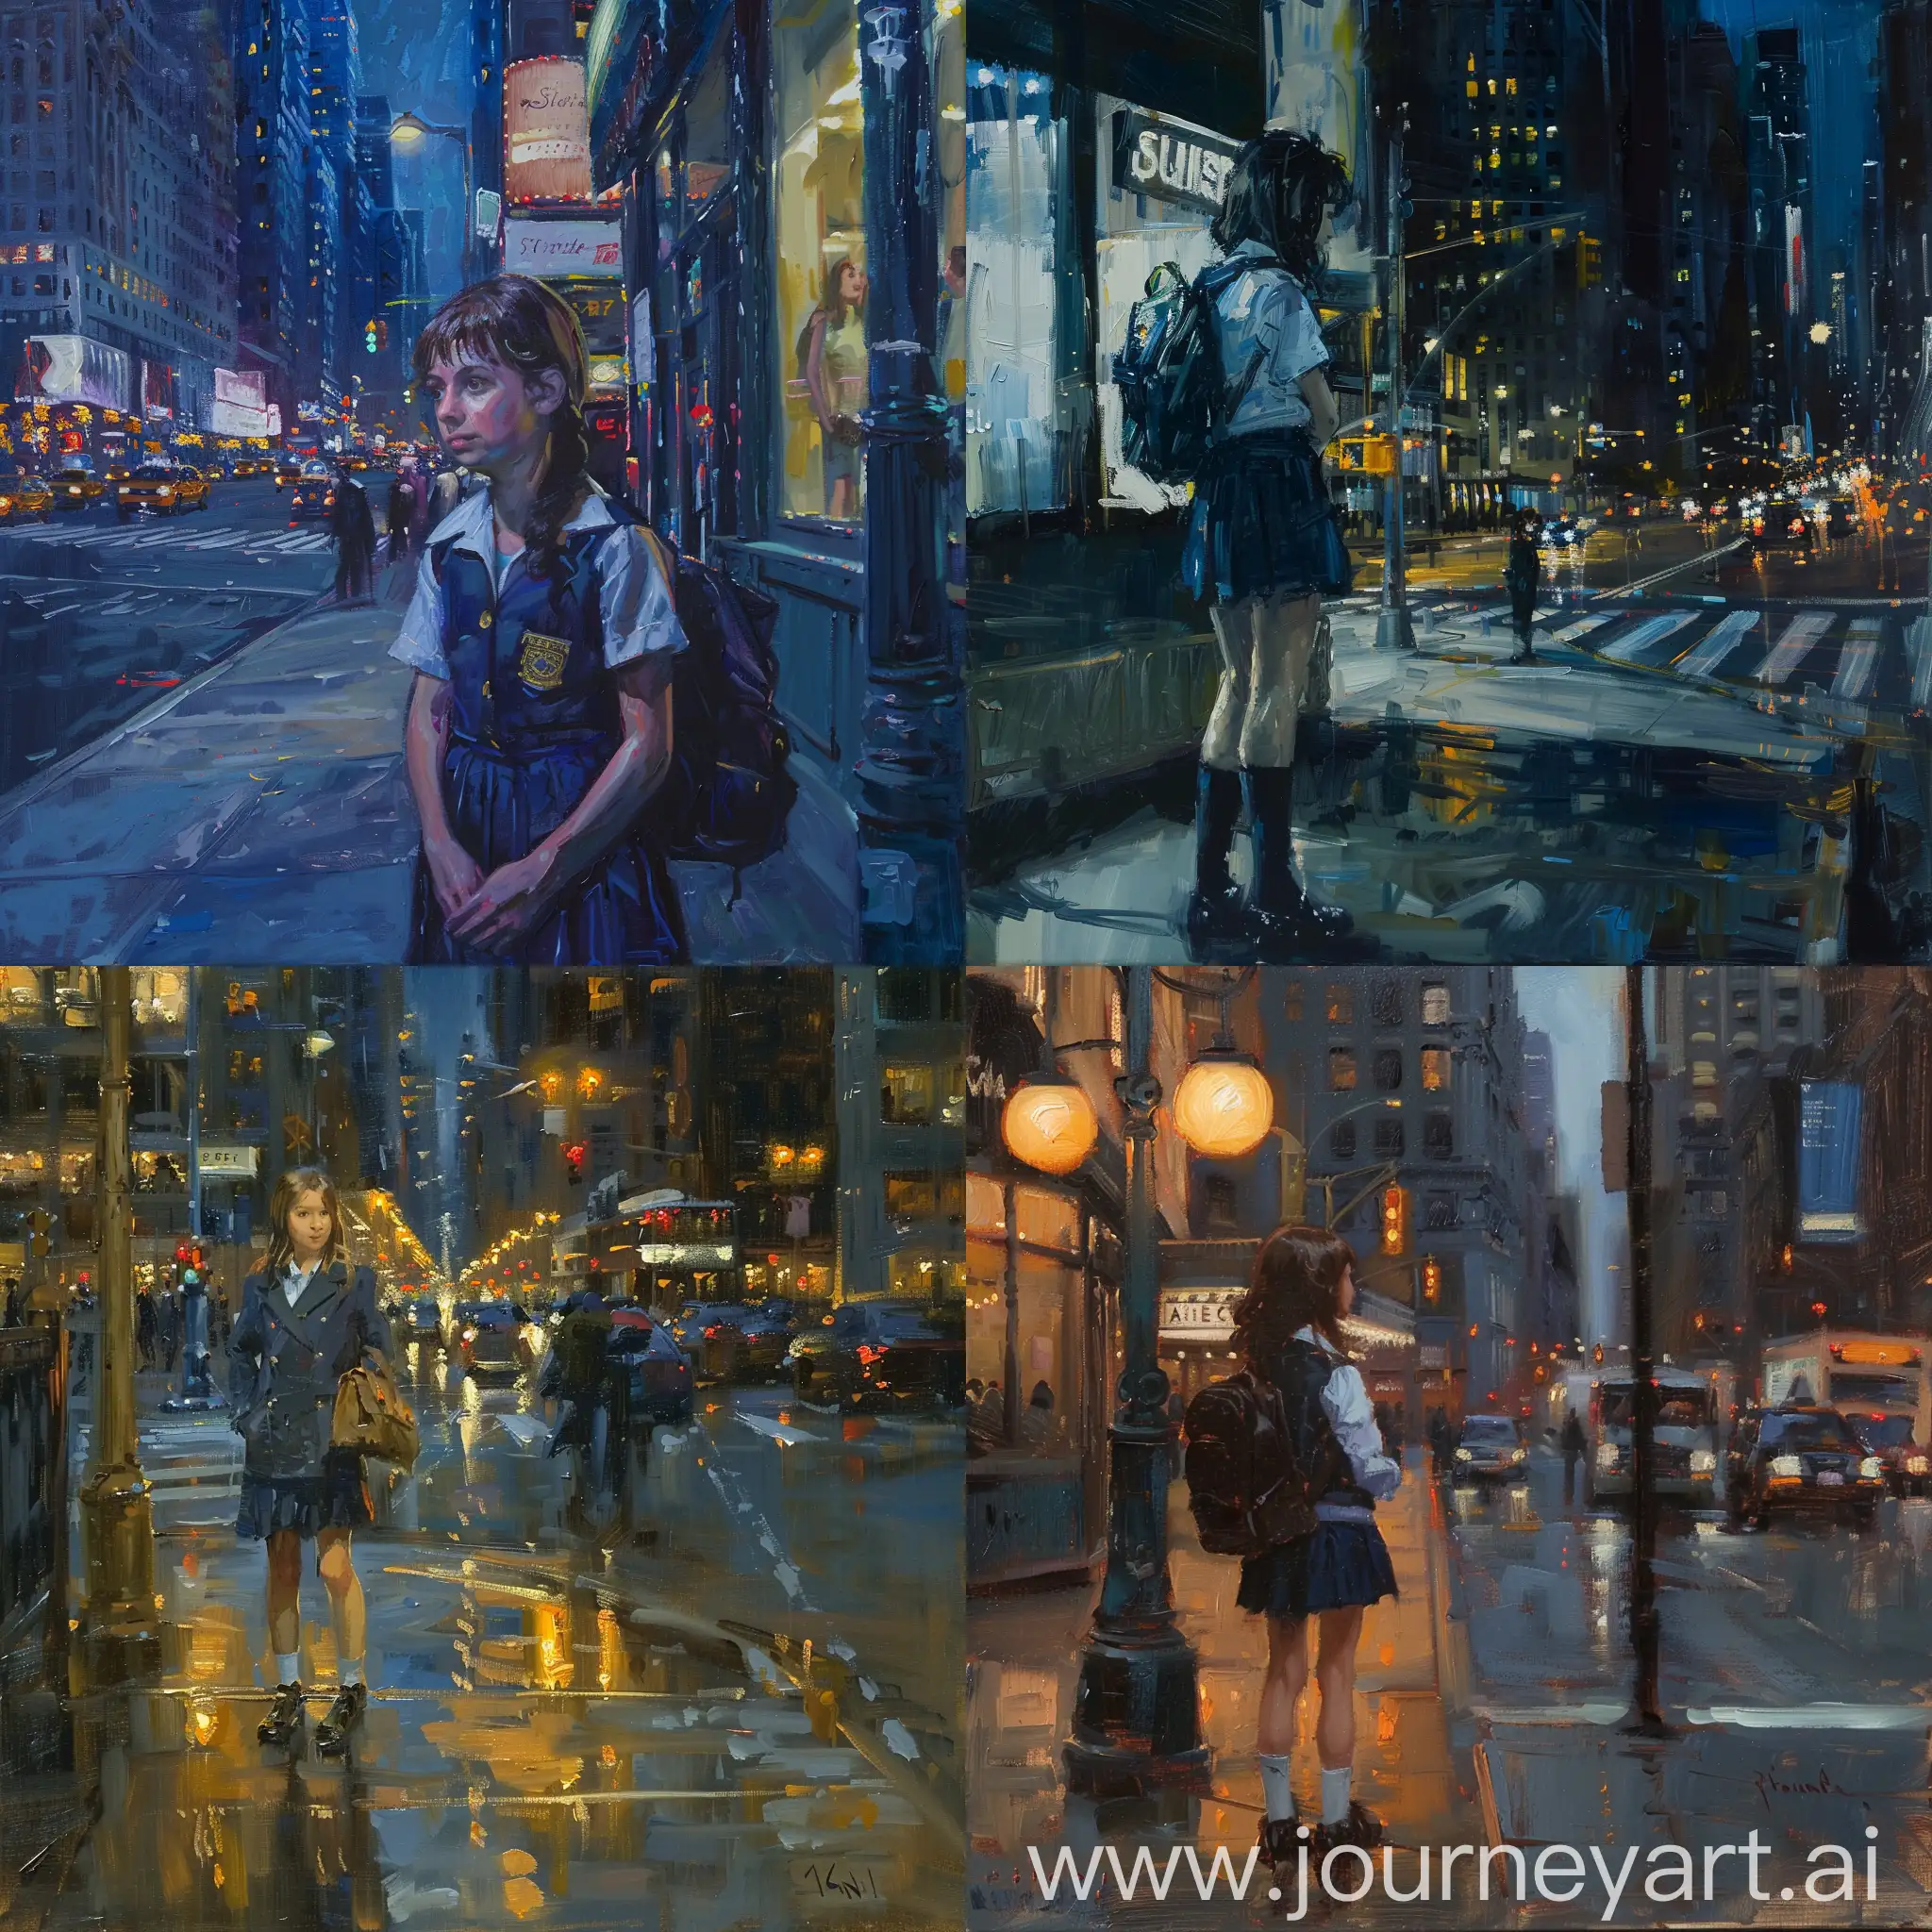 Urban-Night-Scene-Schoolgirl-in-Uniform-Walking-Down-City-Street